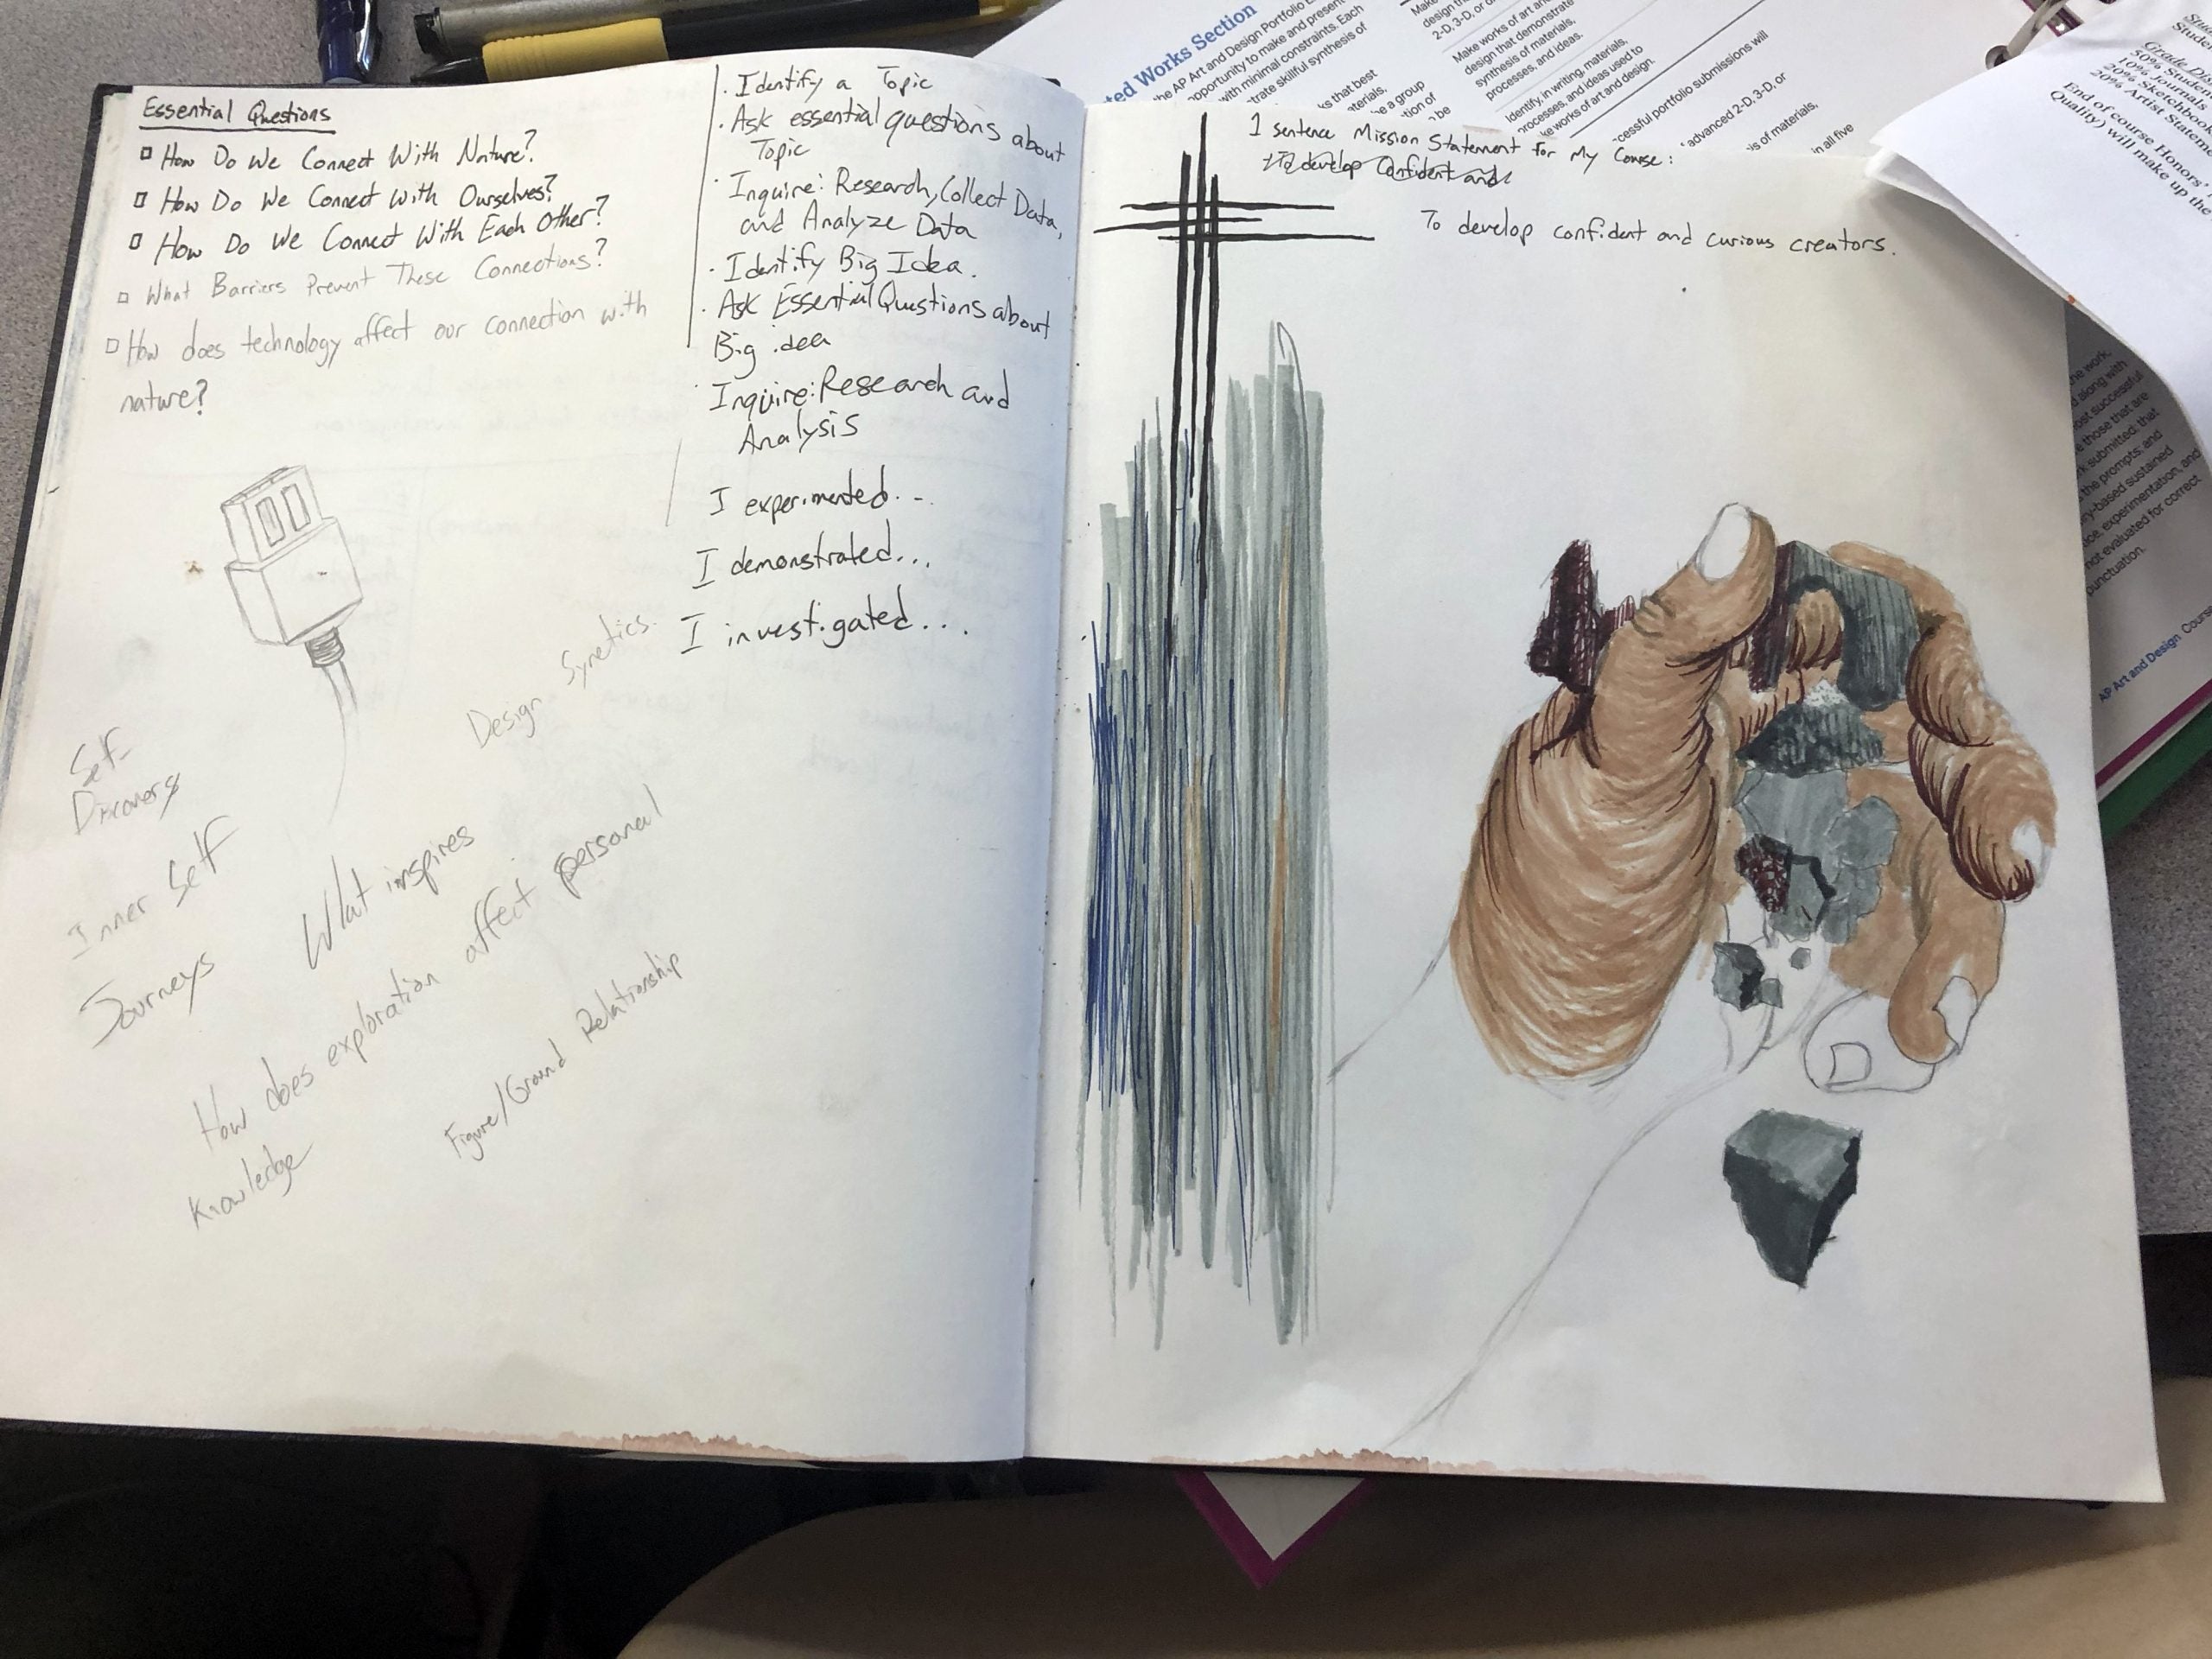 Notebook of Studio Art participant